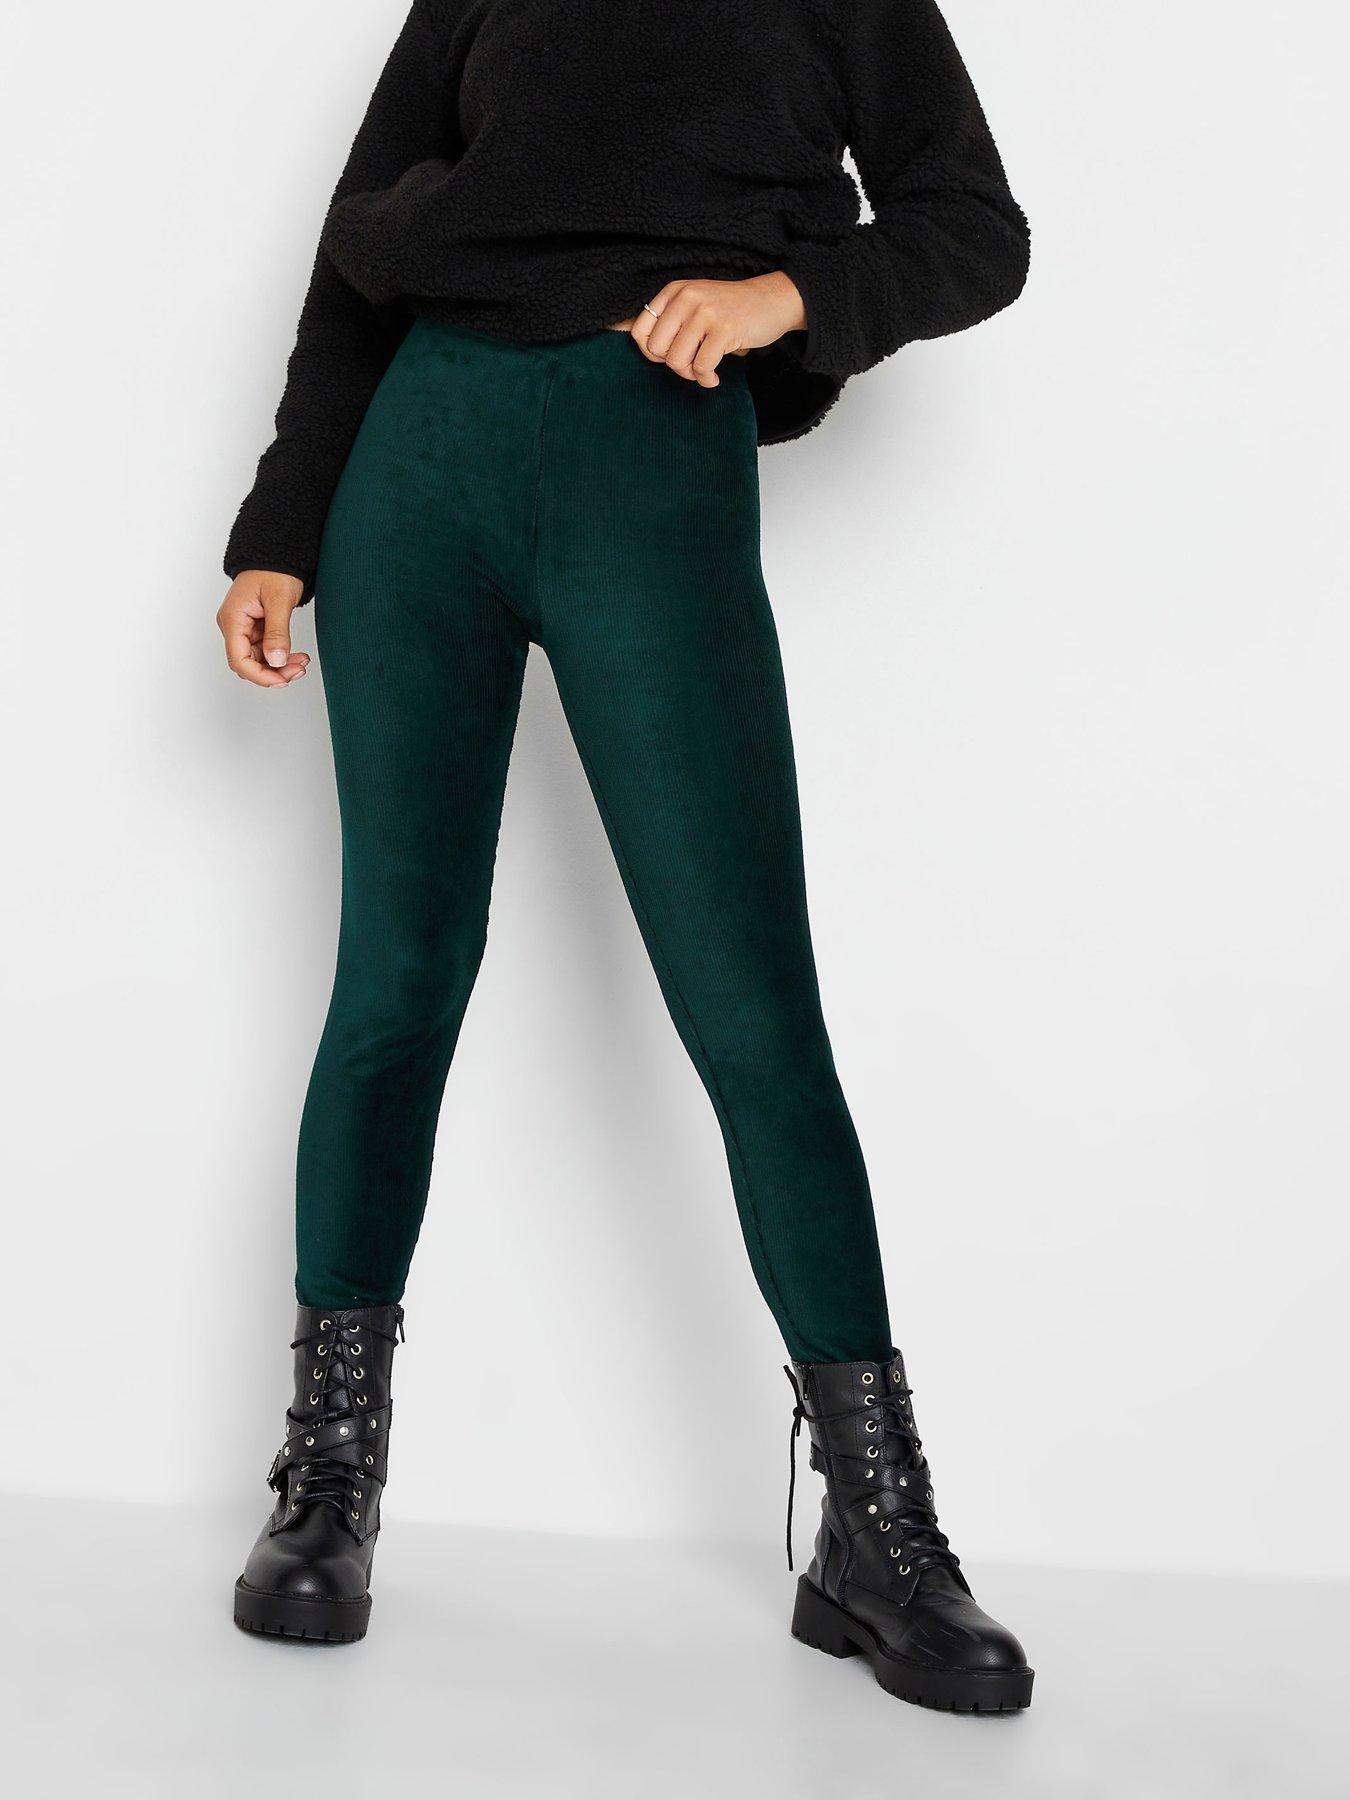 PixieGirl Black Stretch Leather Look Leggings Petite : : Fashion